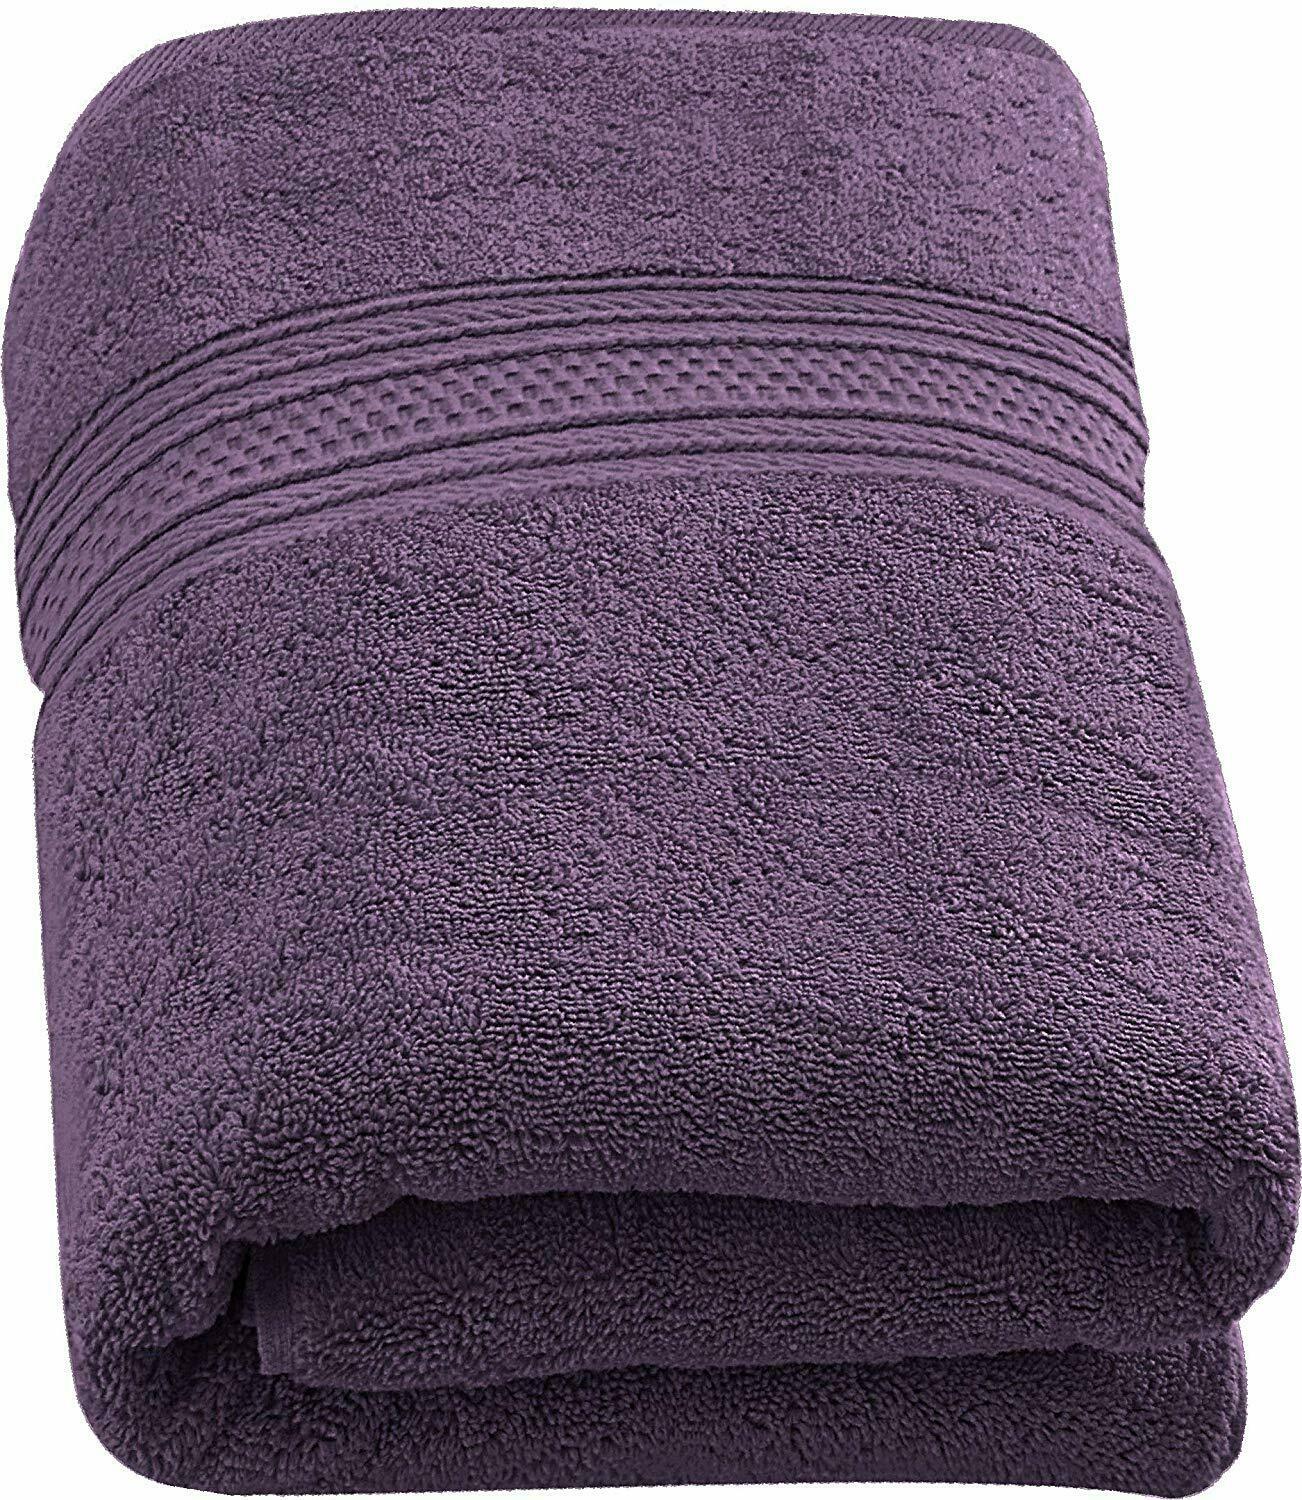 Utopia Towels Extra Large Bath Towel 35x70" Cotton Luxury Bath Sheet 600 GSM